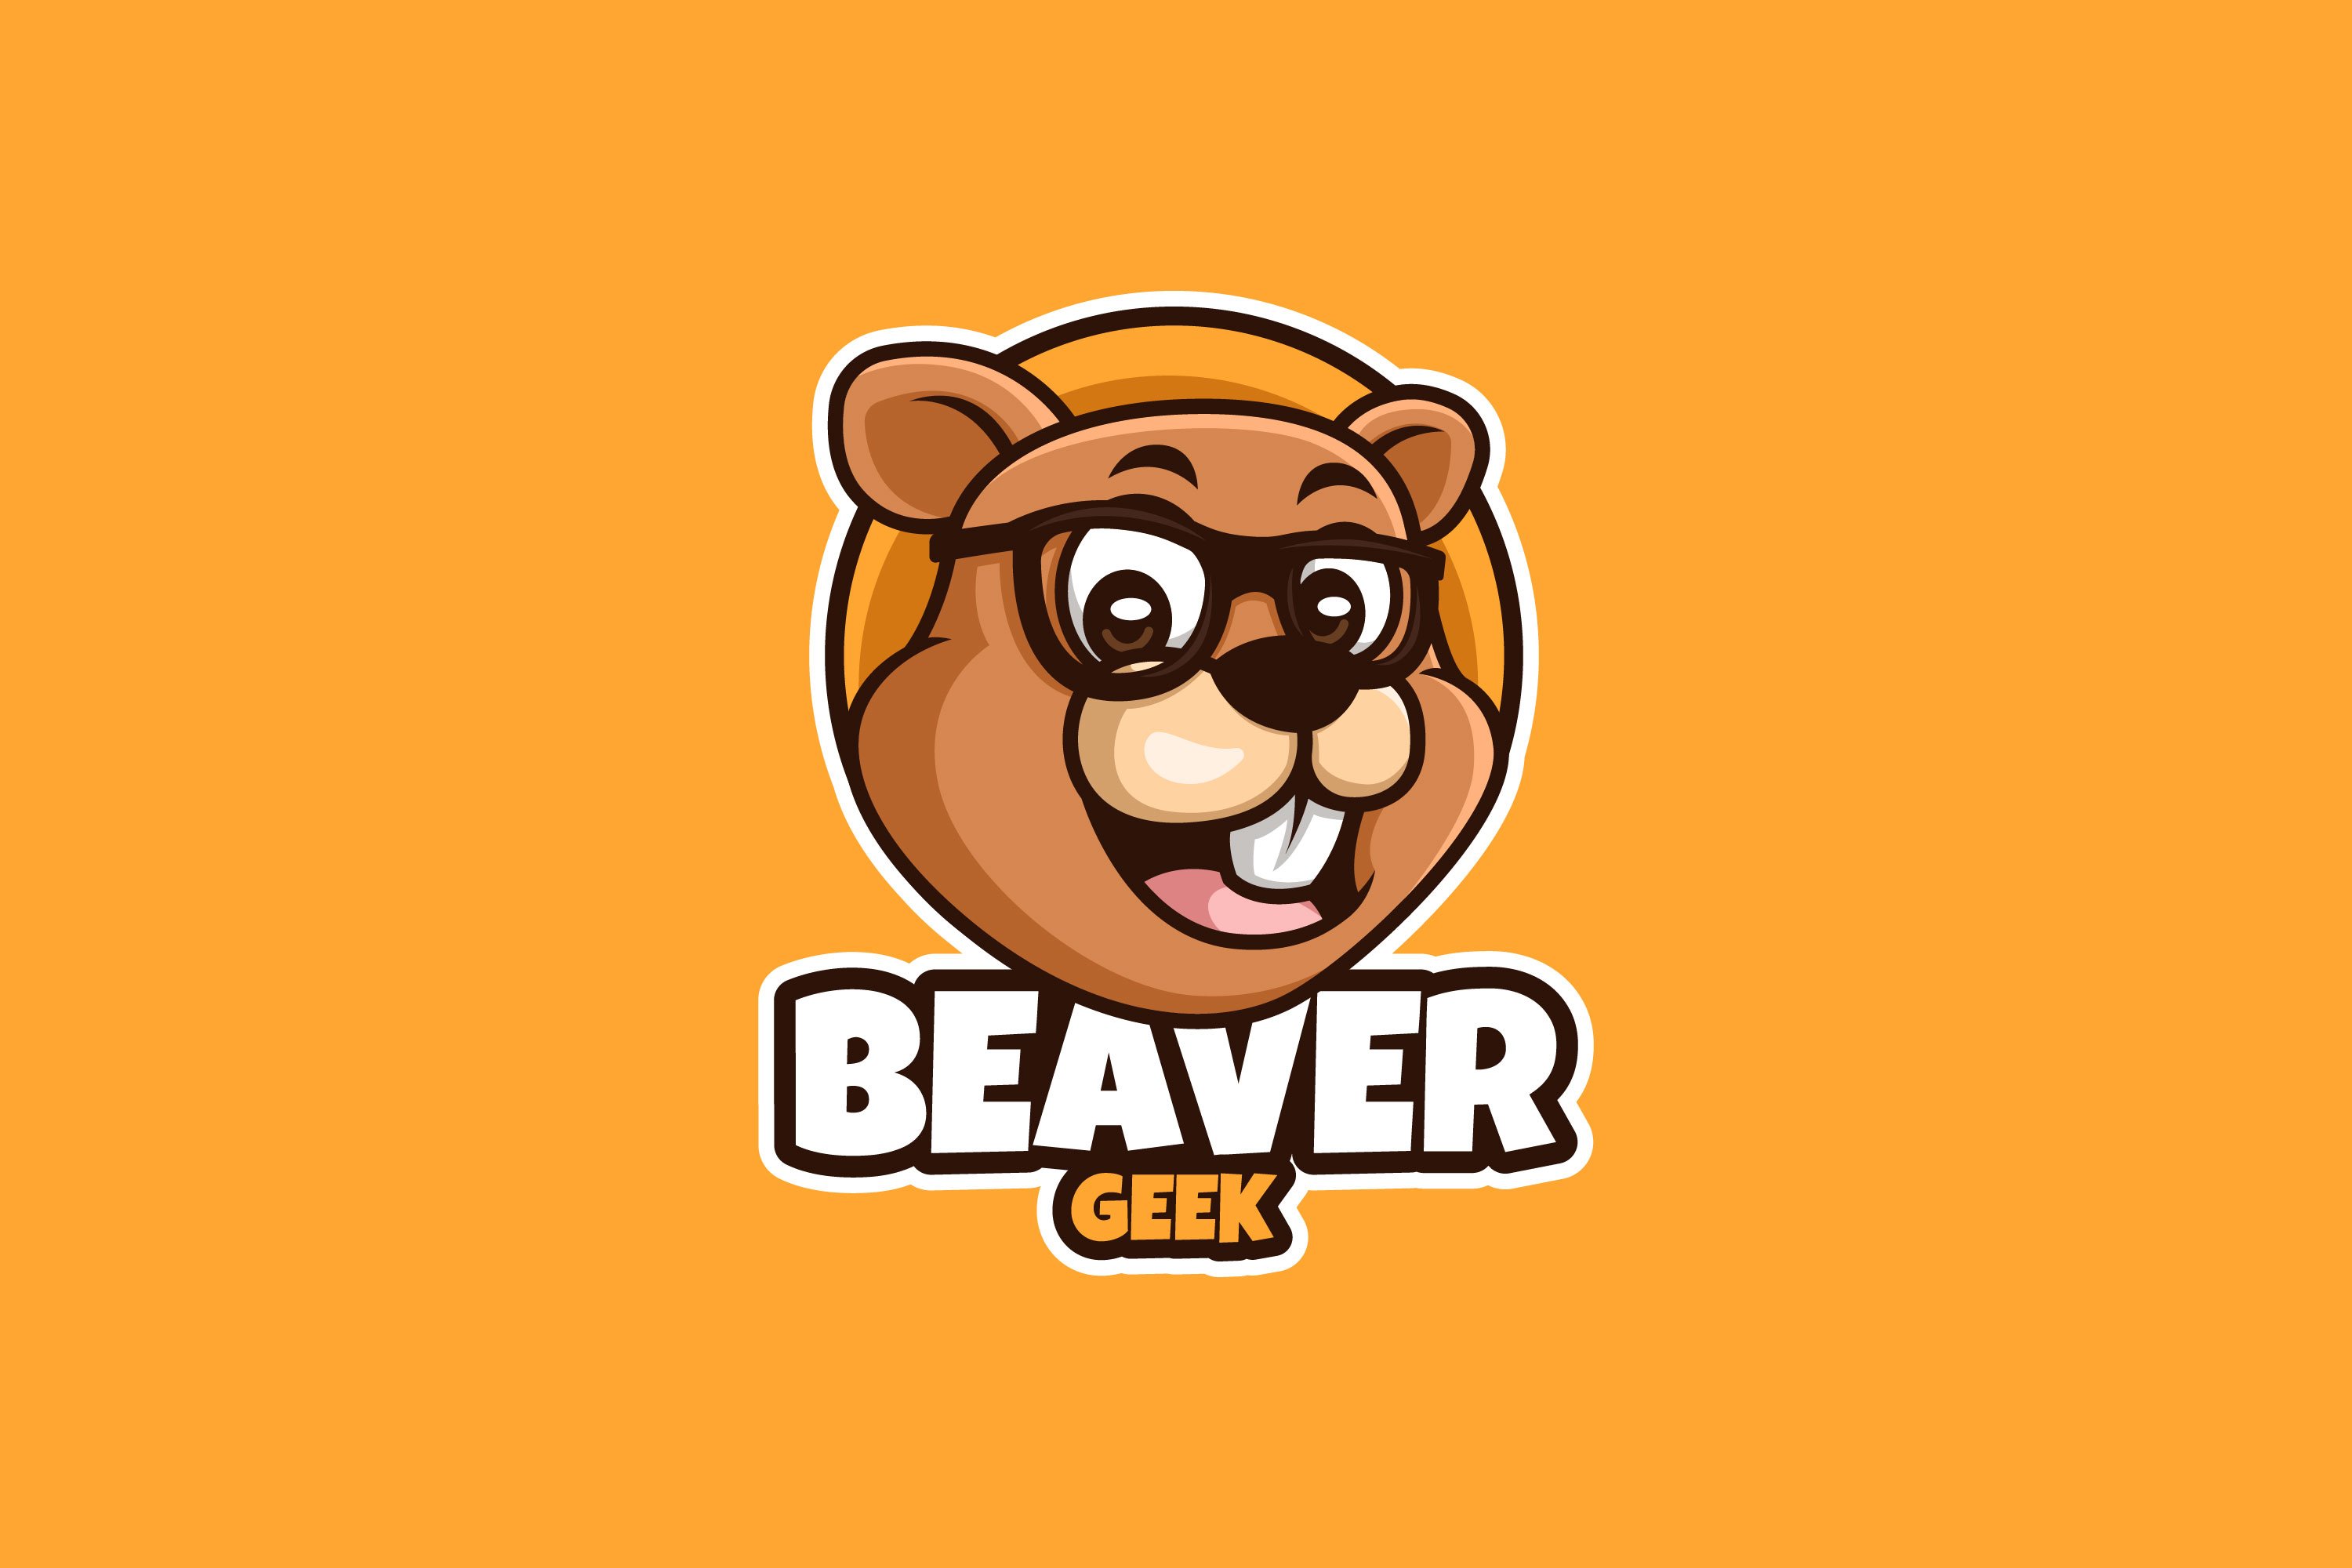 Beaver Geek Cartoon Logo cover image.